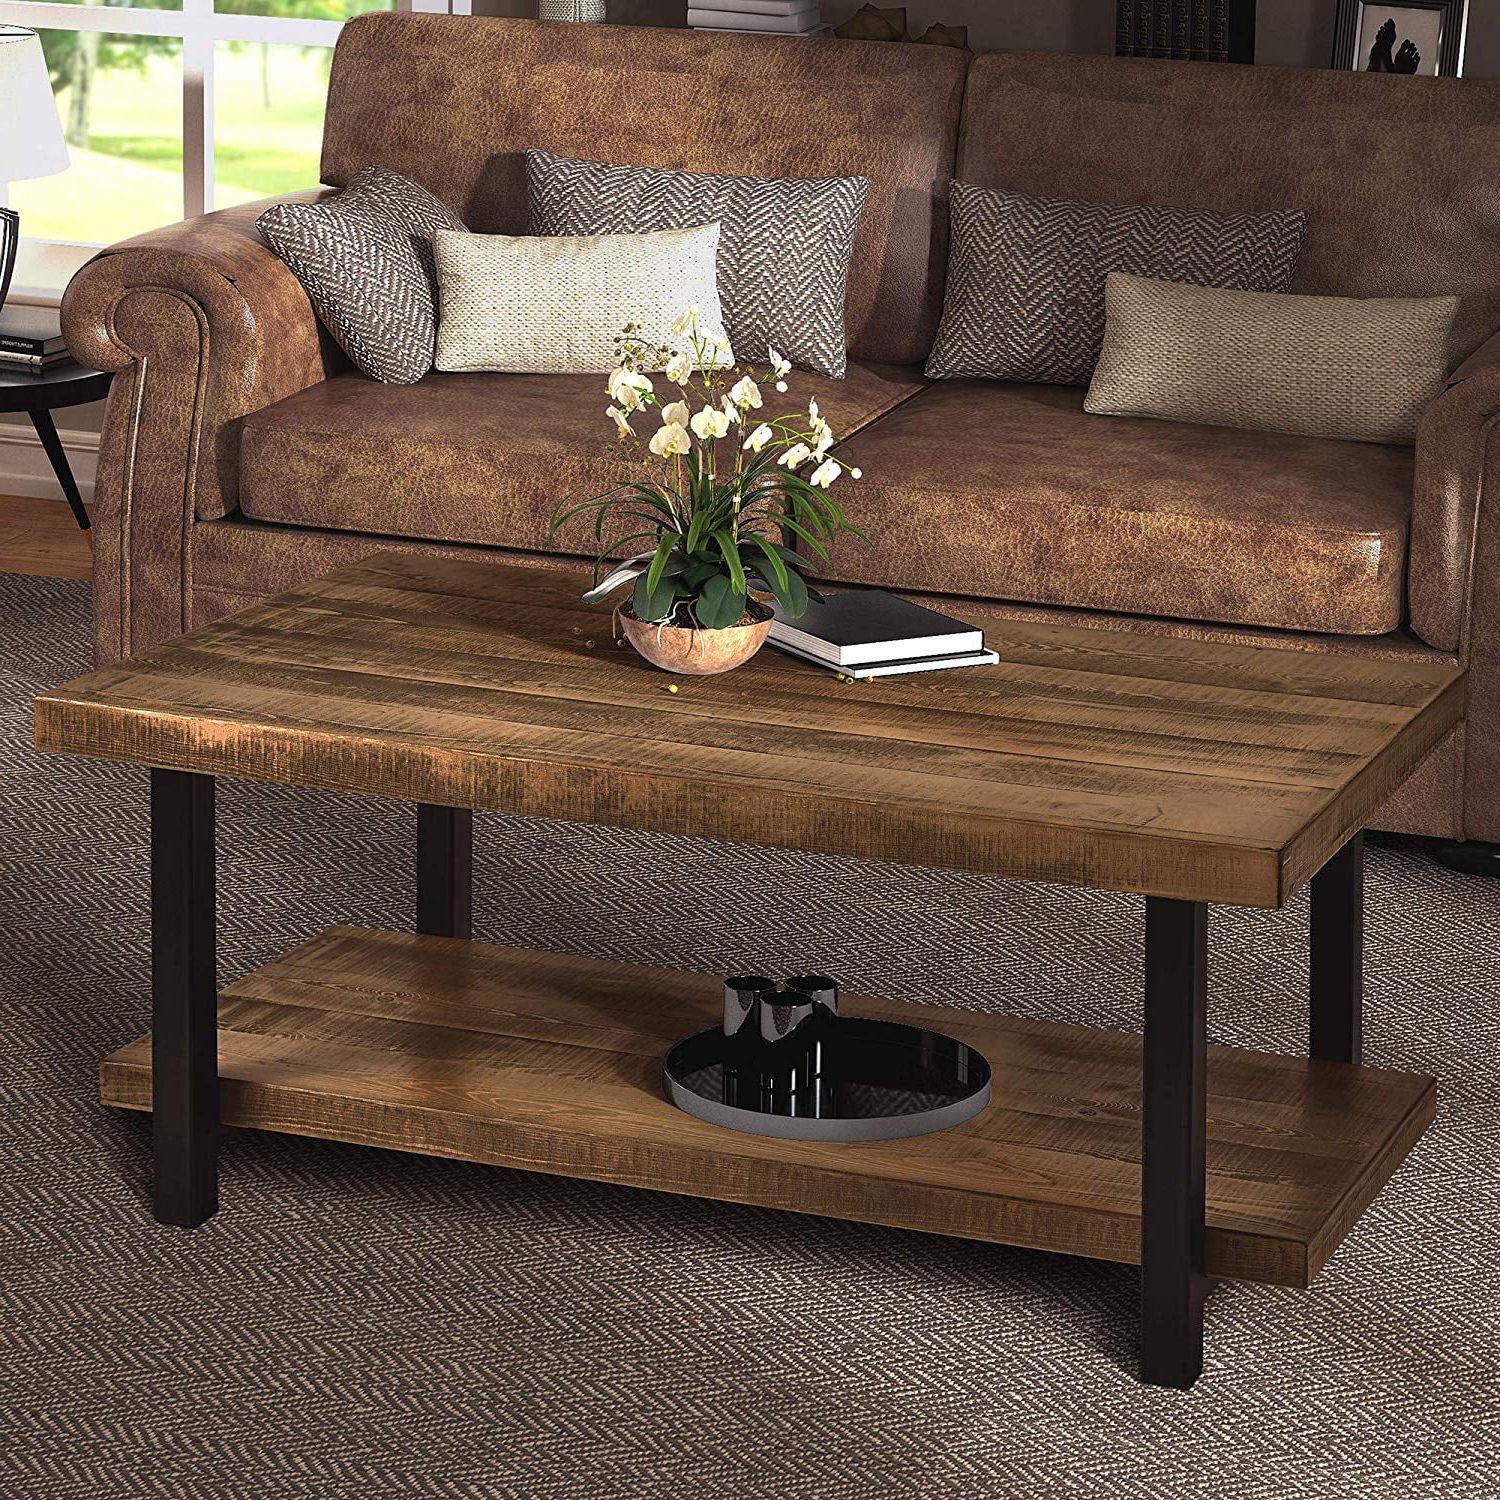 Harper&bright Designs Industrial Rectangular Pine Wood Coffee Table Regarding Rustic Wood Coffee Tables (Gallery 7 of 20)